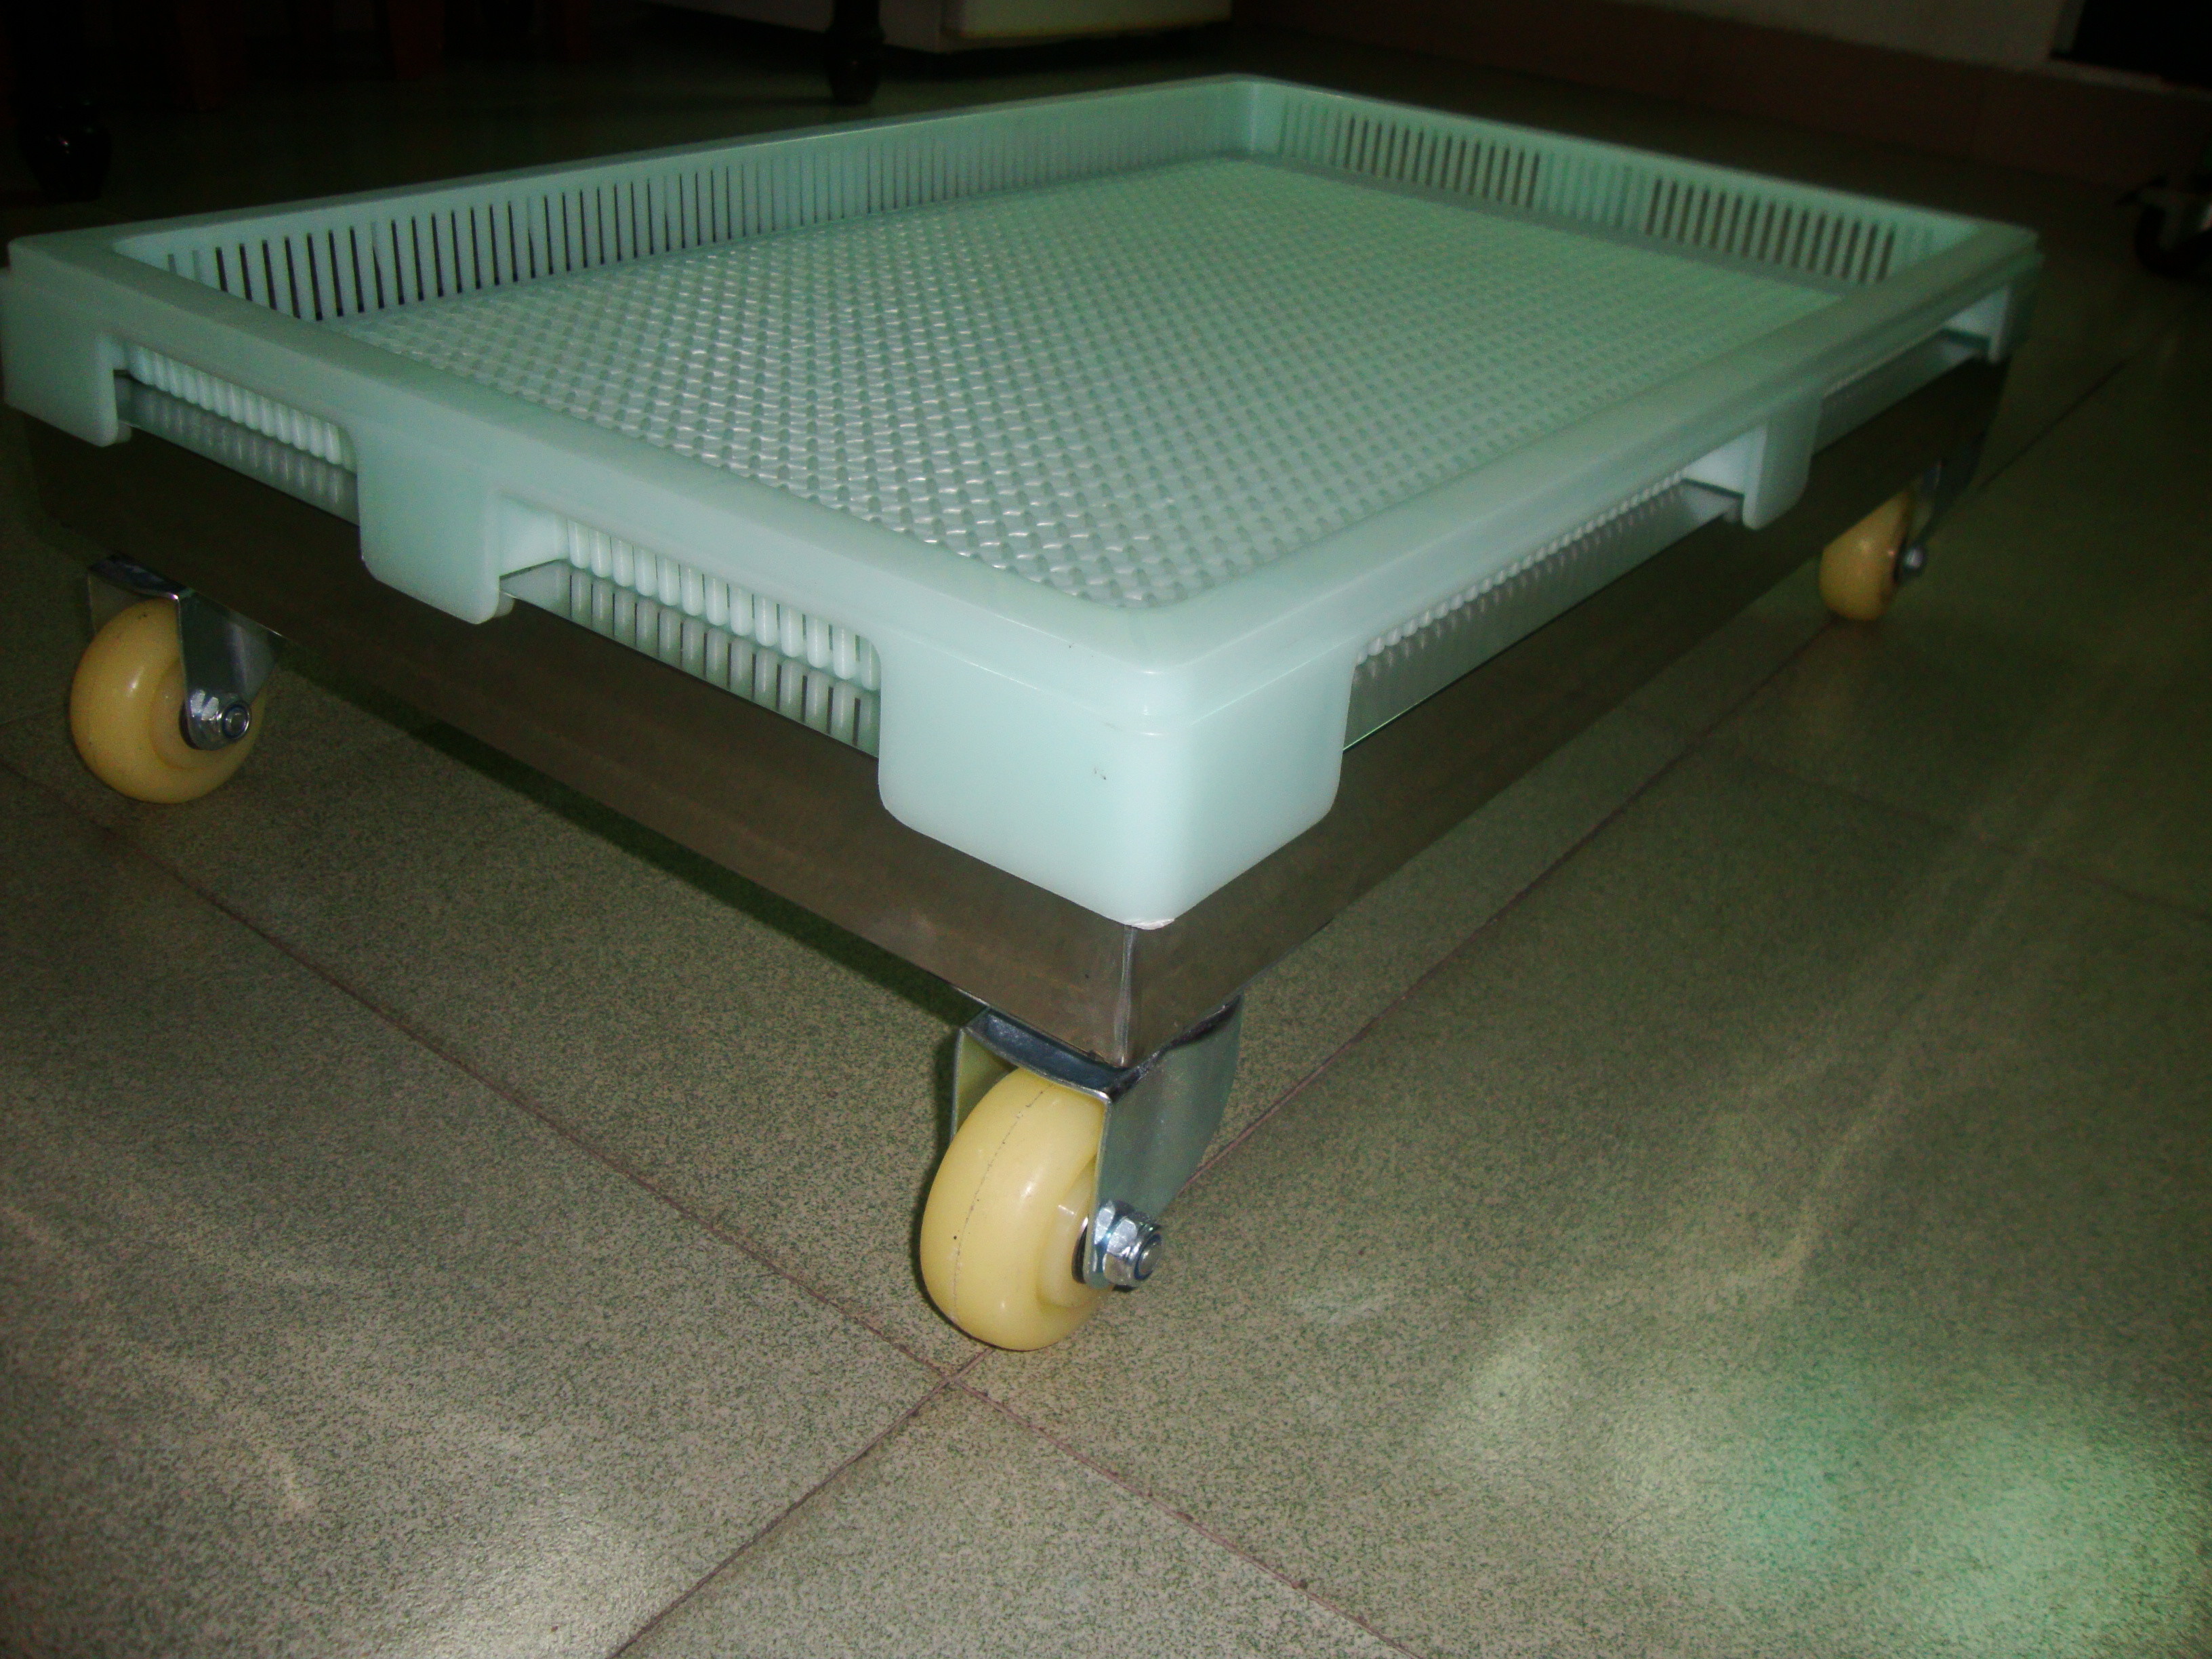 Capsule Plastic Drying Trays